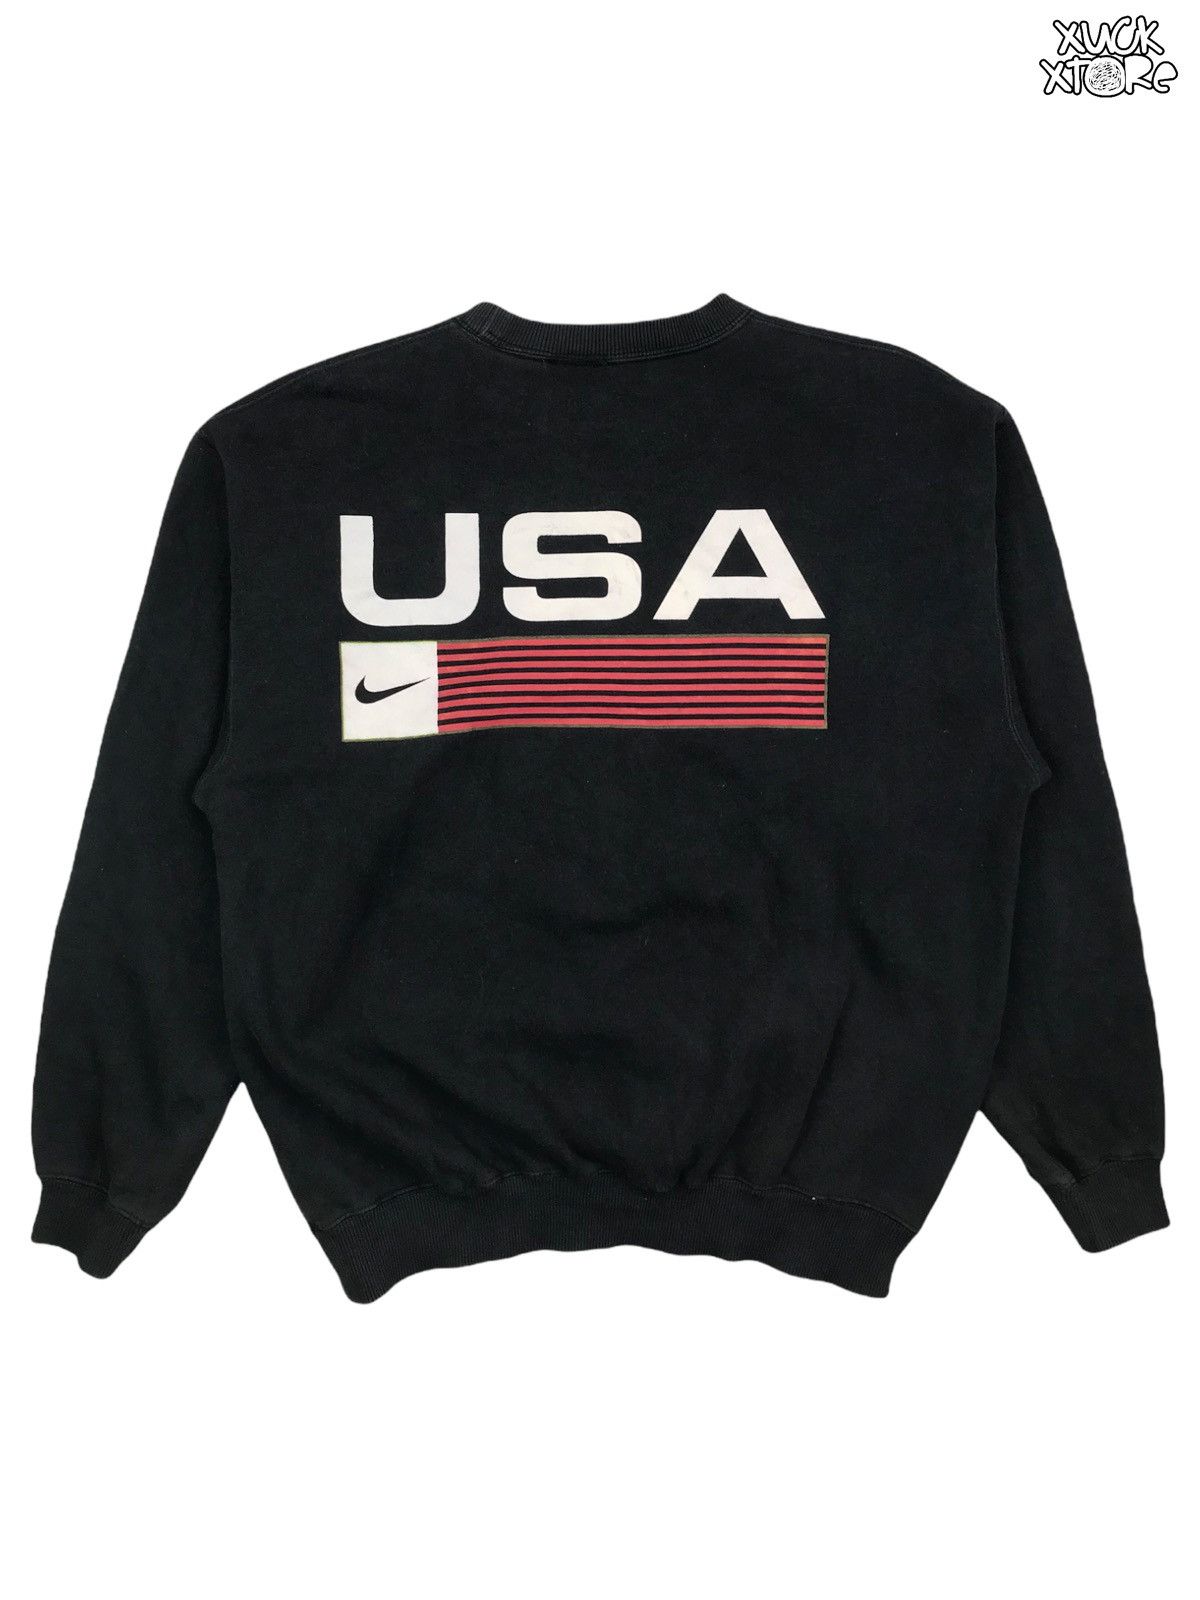 Vintage 90s NIKE USA Sweatshirt L |